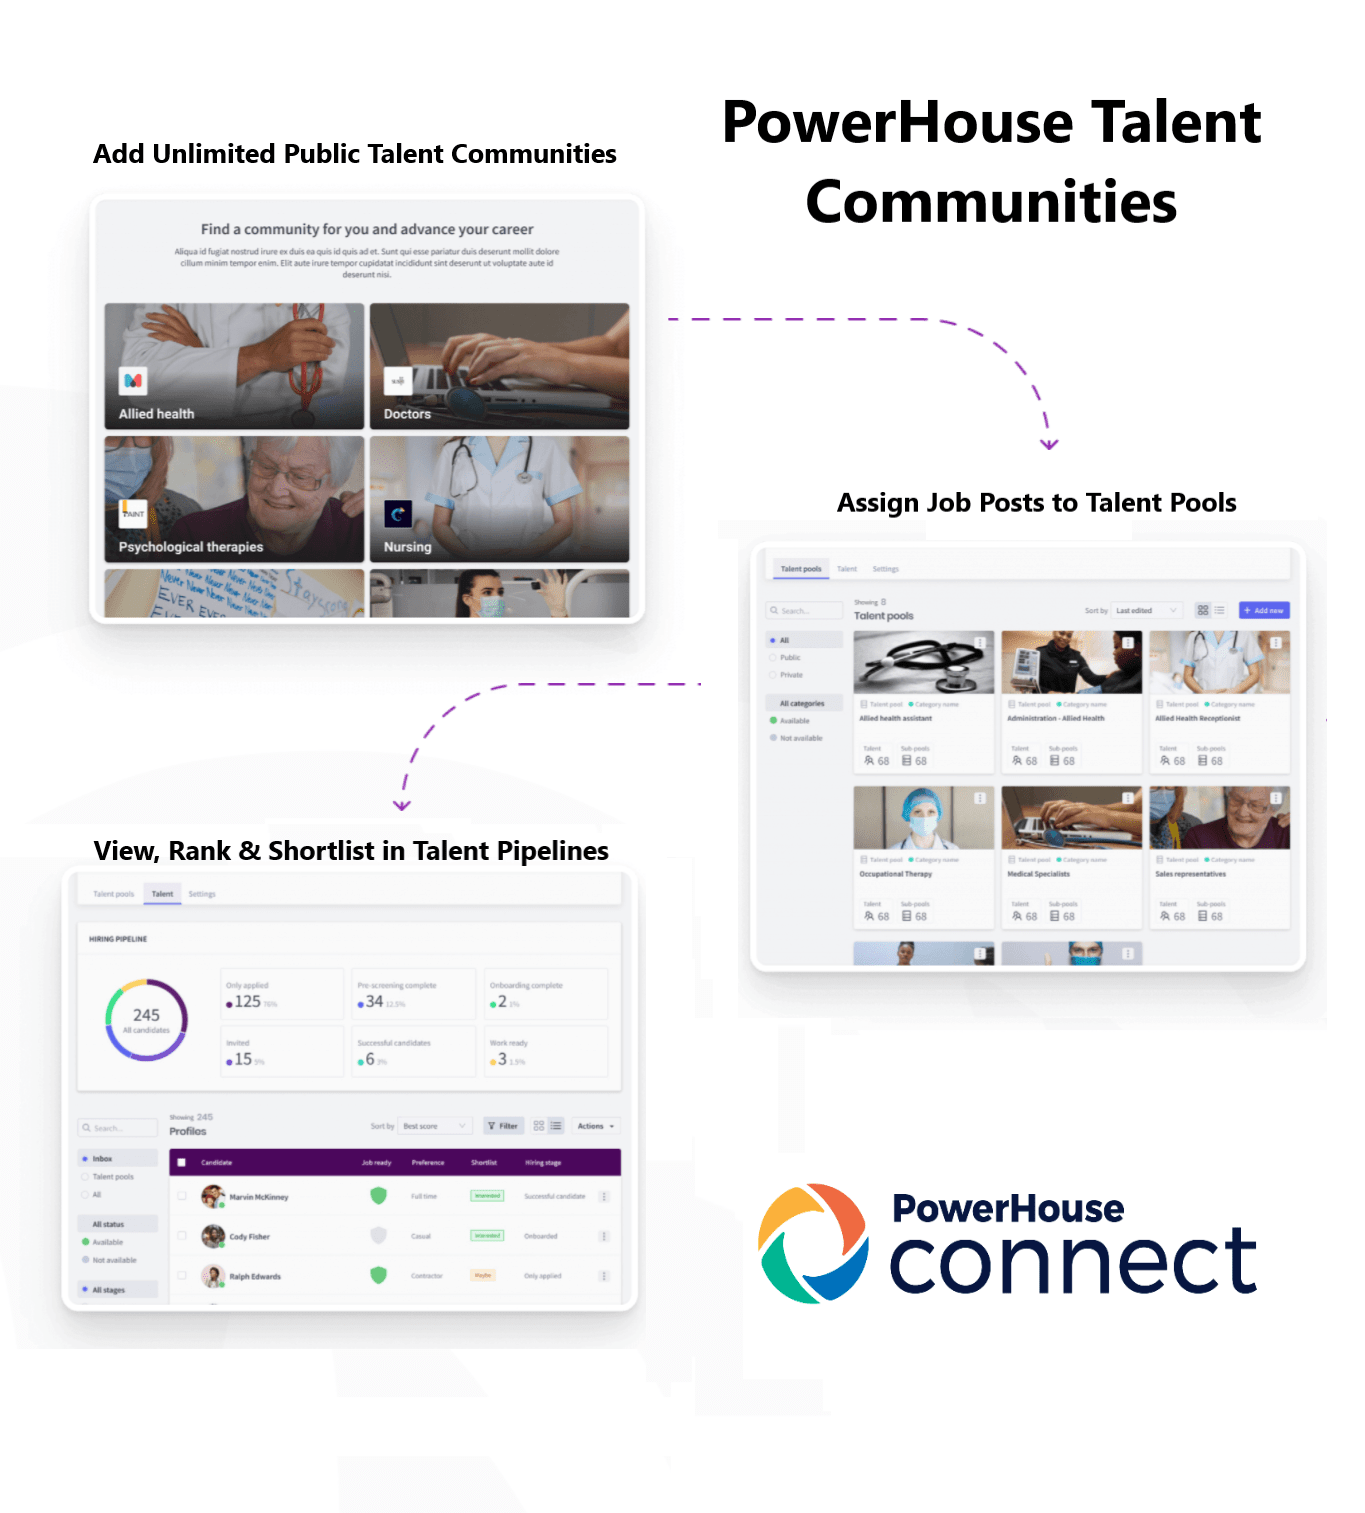 PowerHouse Talent Communities